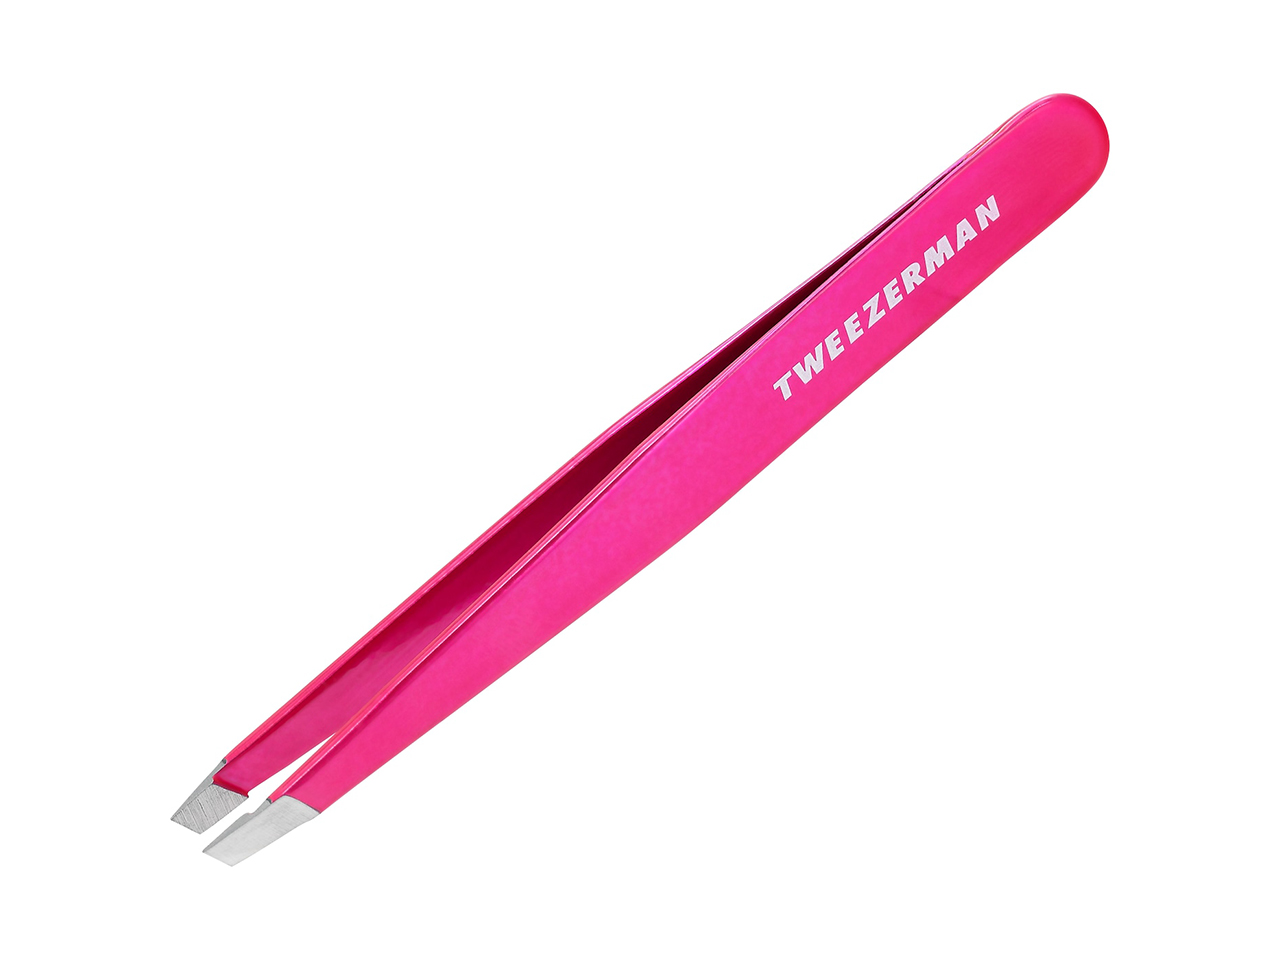 A pair of pink slanted tweezers from Tweezerman.